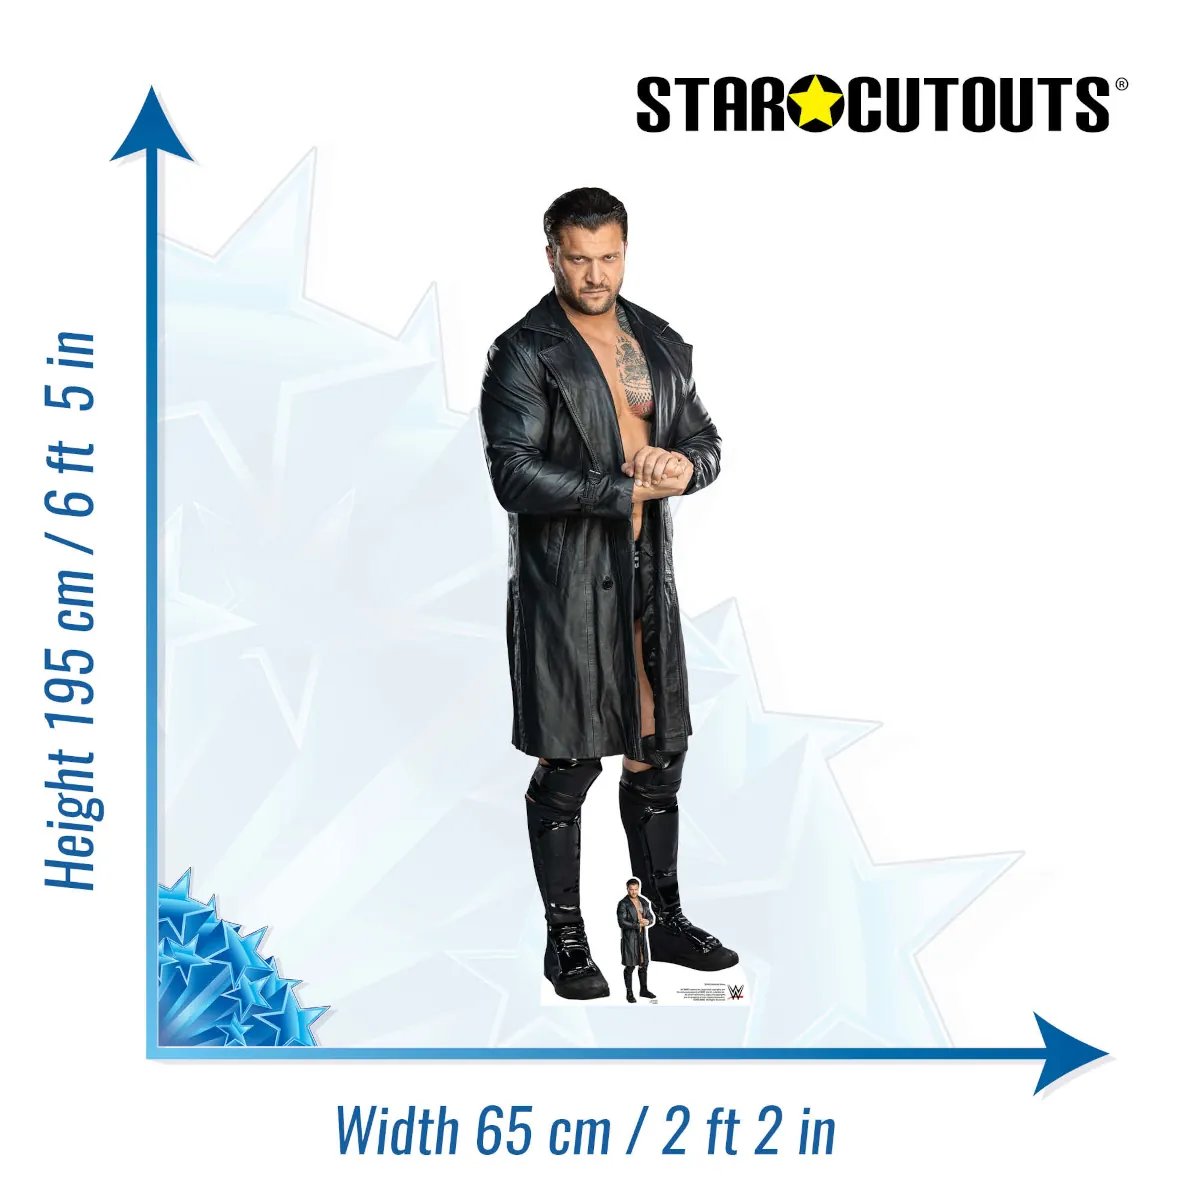 SC4423 Karrion Kross (WWE) Official Lifesize + Mini Cardboard Cutout Standee Size